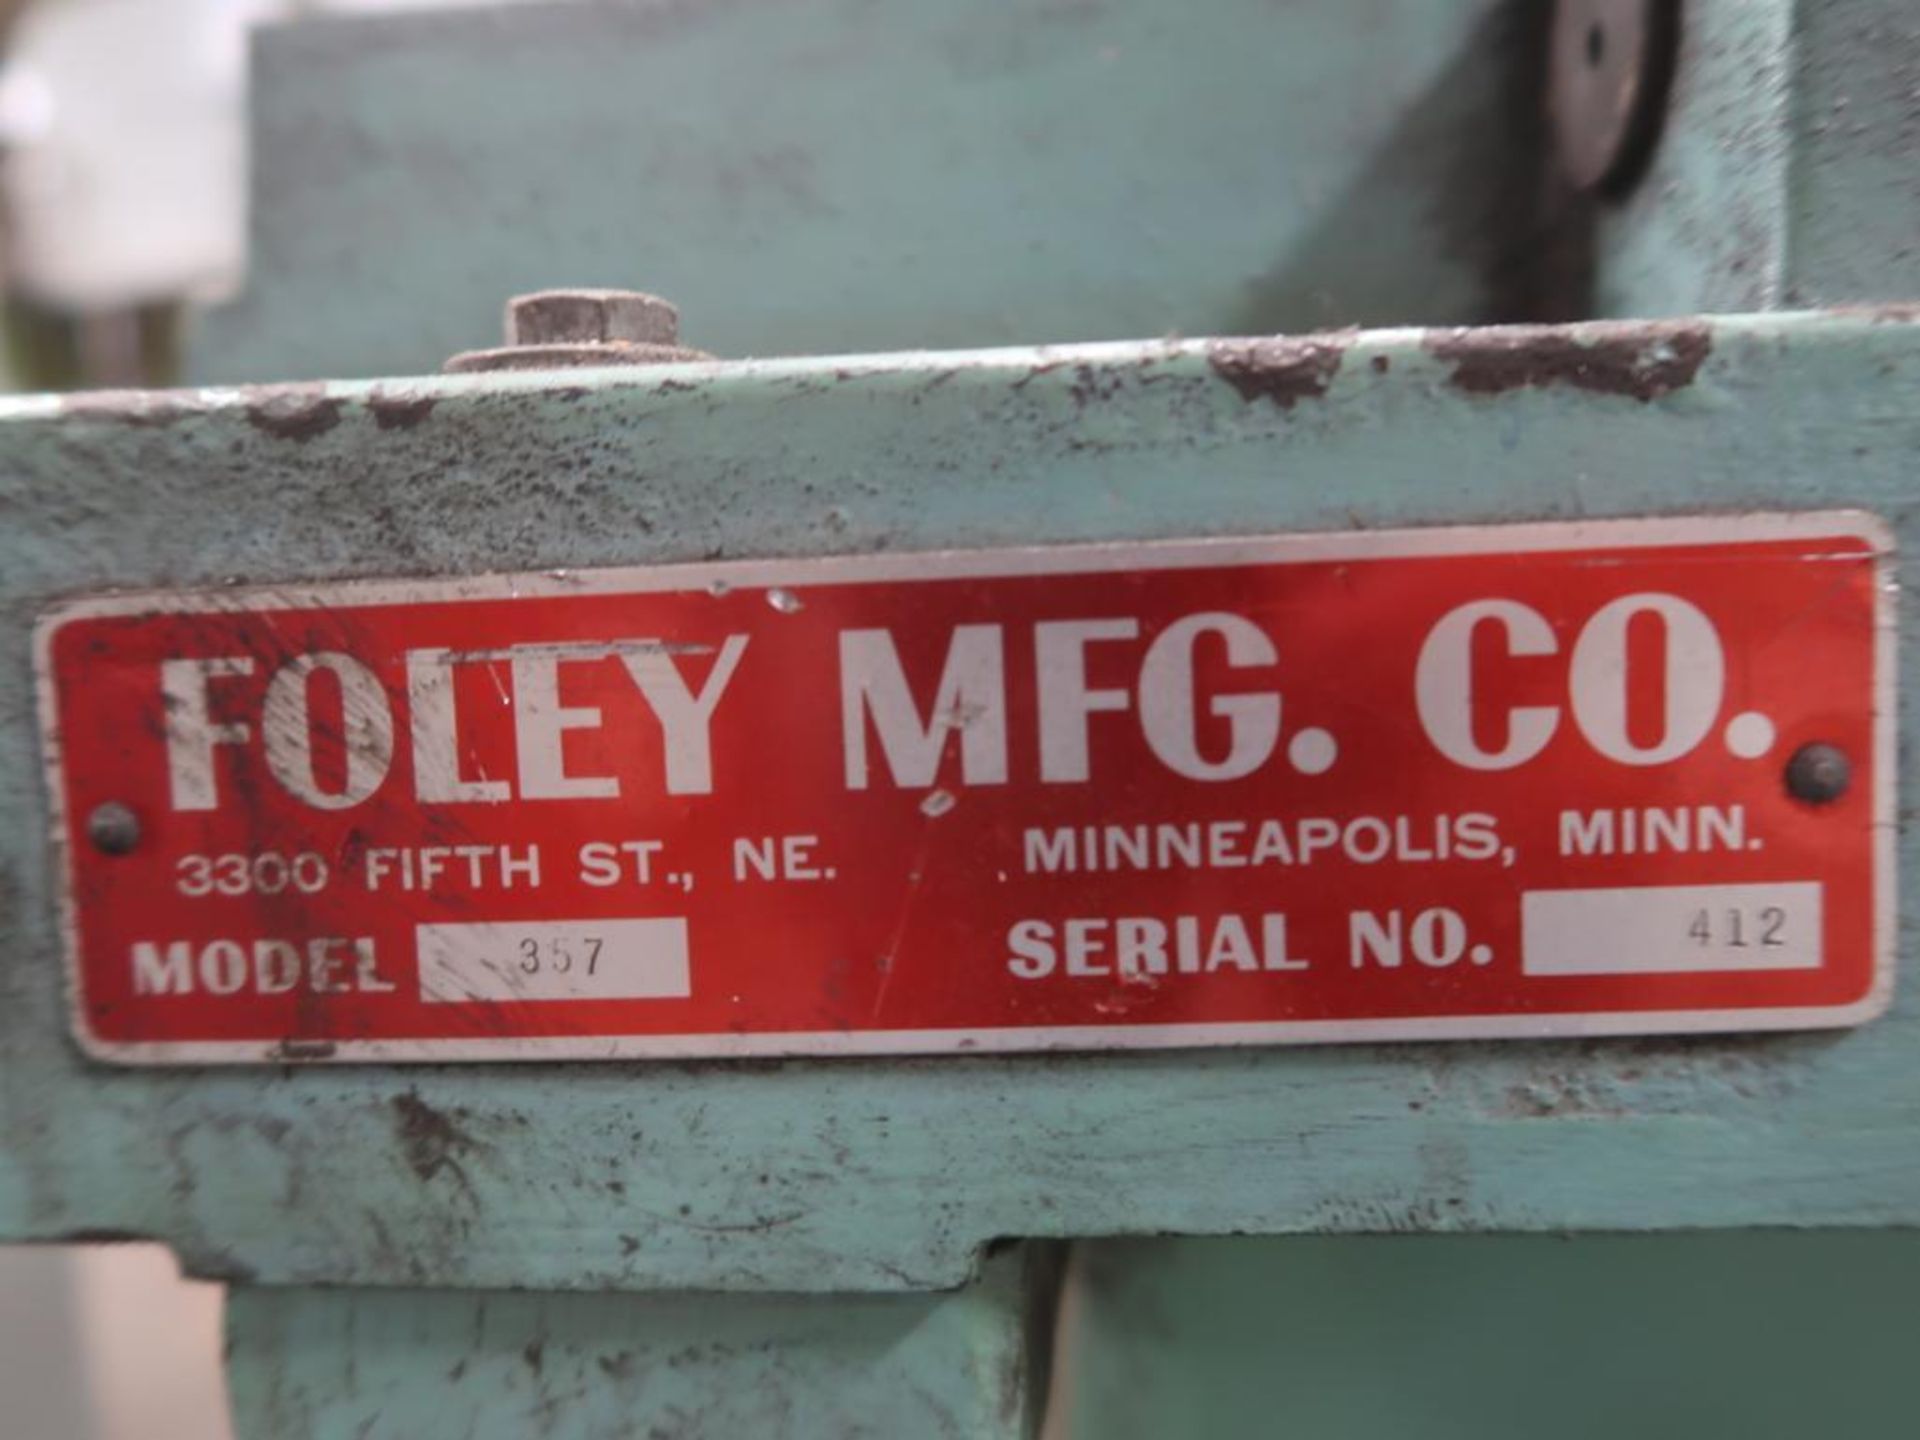 Foley Carbide Saw Grinder Model 357 (#216), LOCATION: TOOL ROOM - Image 2 of 2